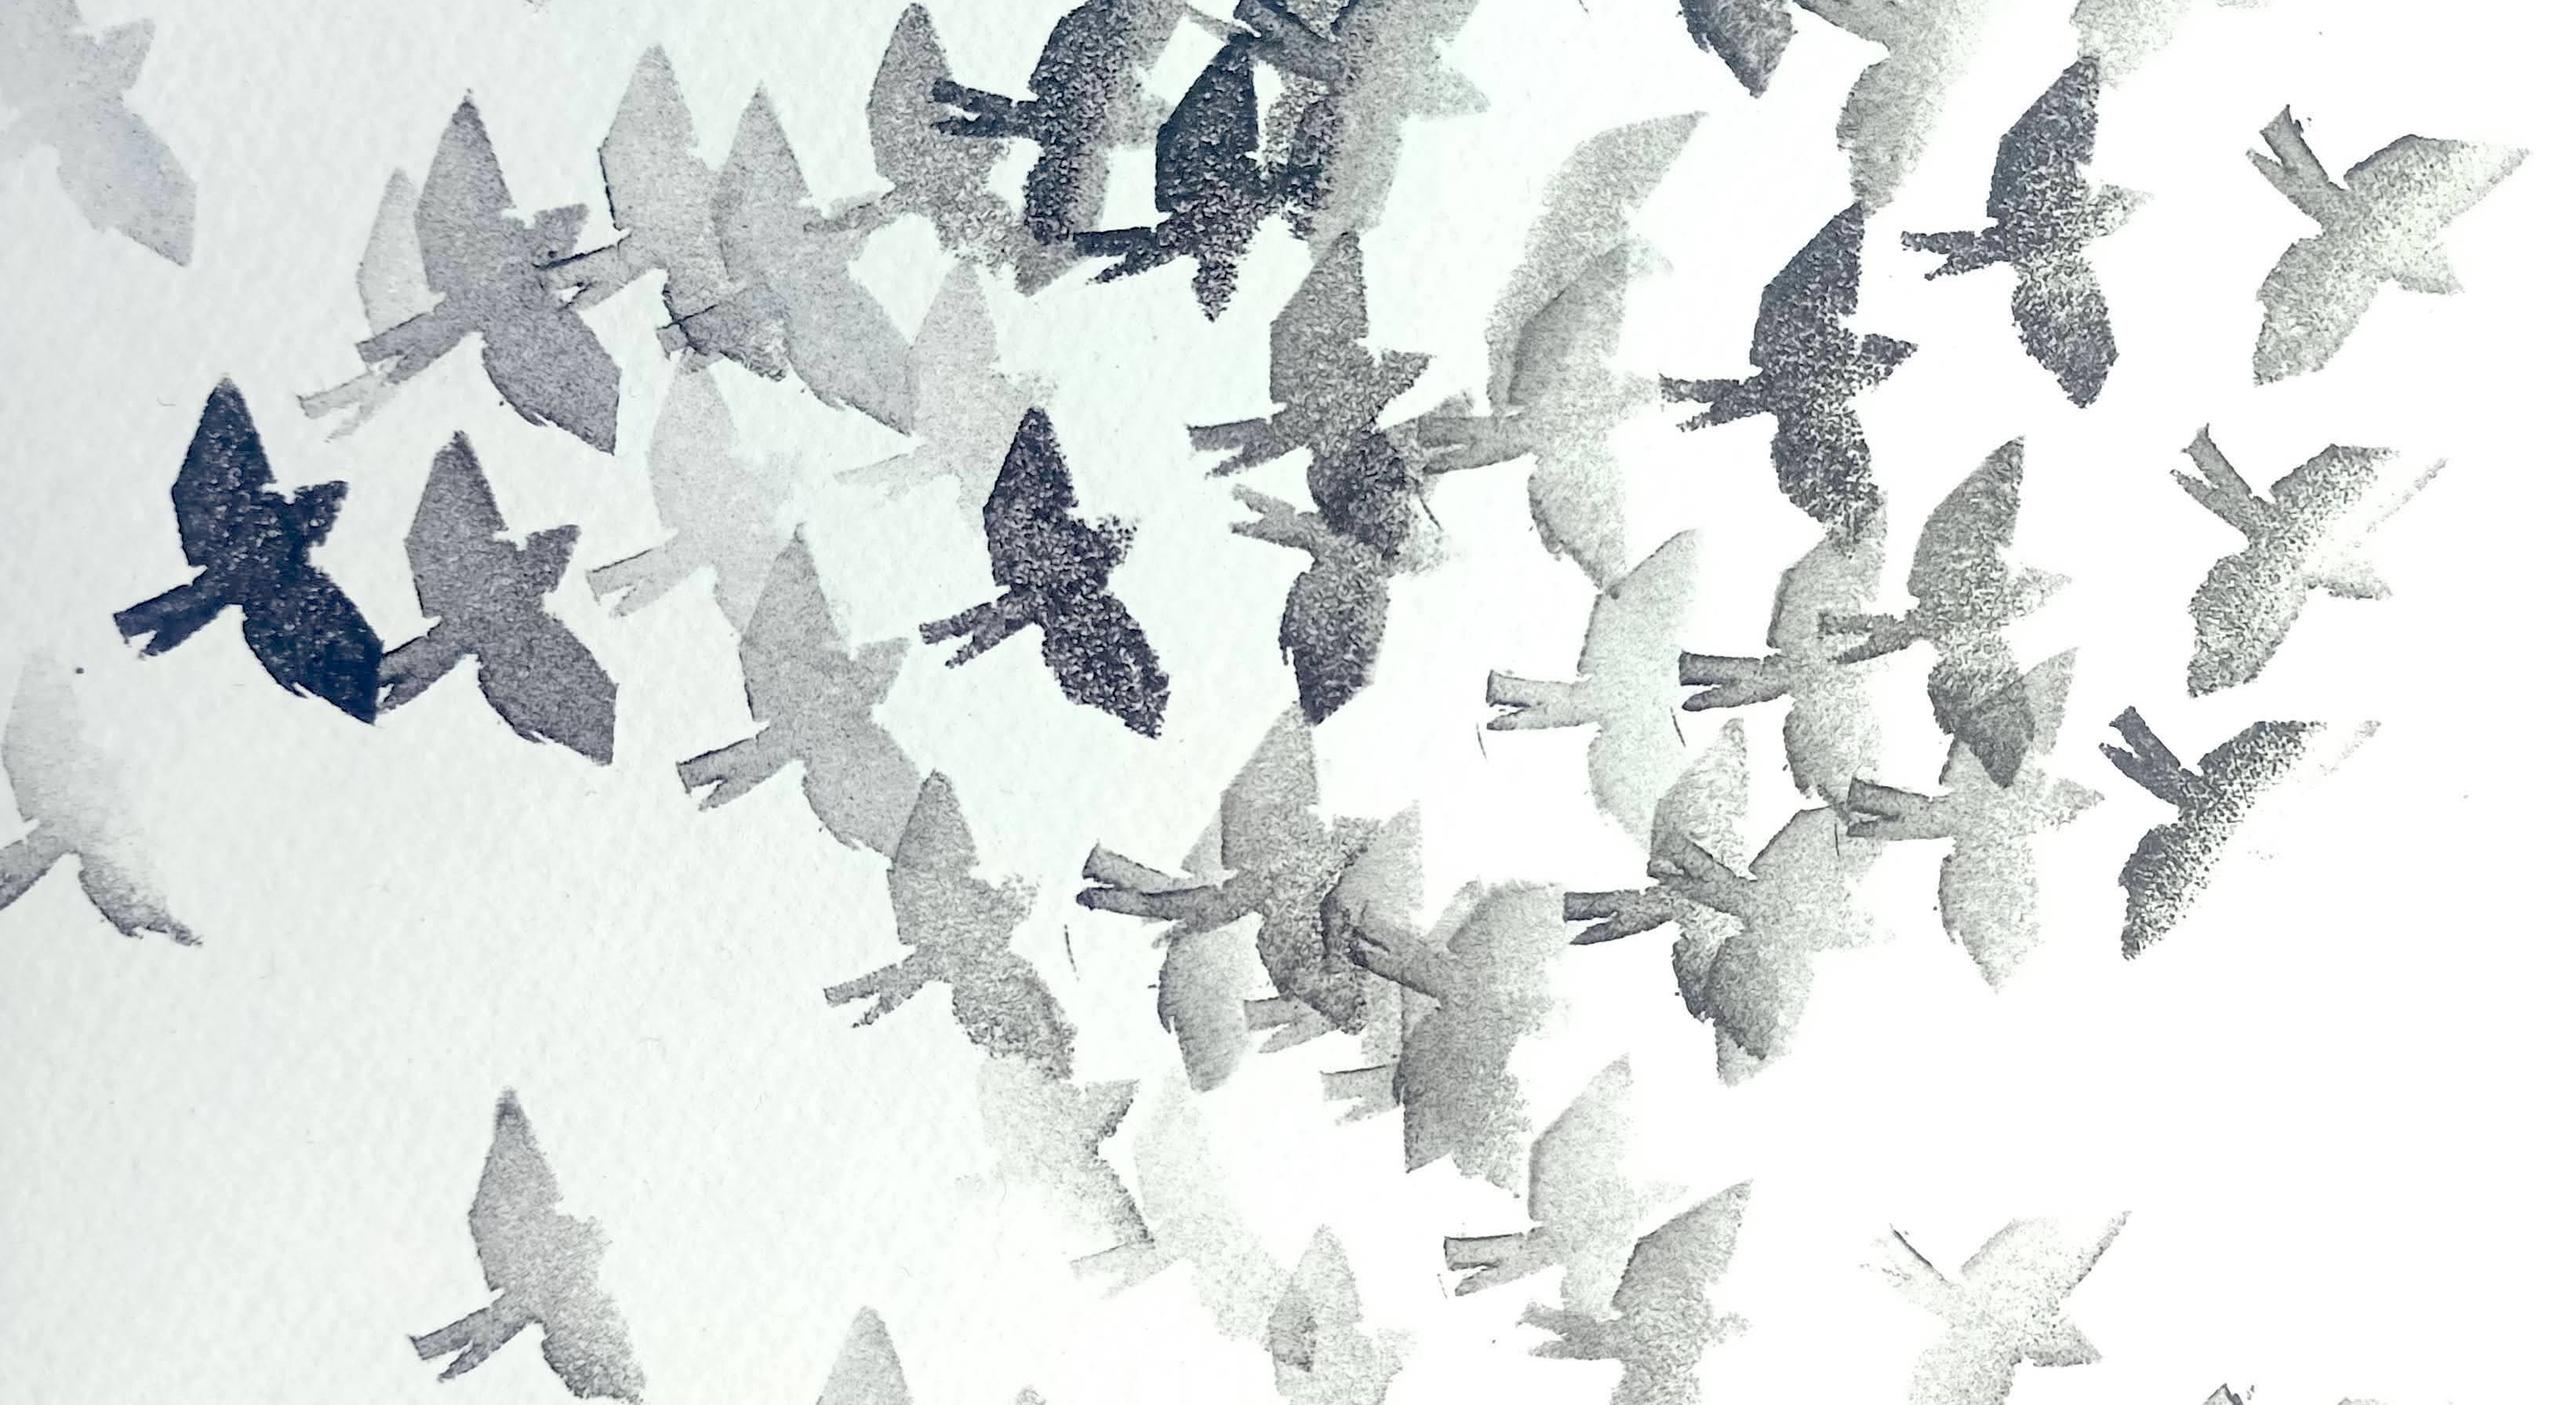 print of bird silhouettes